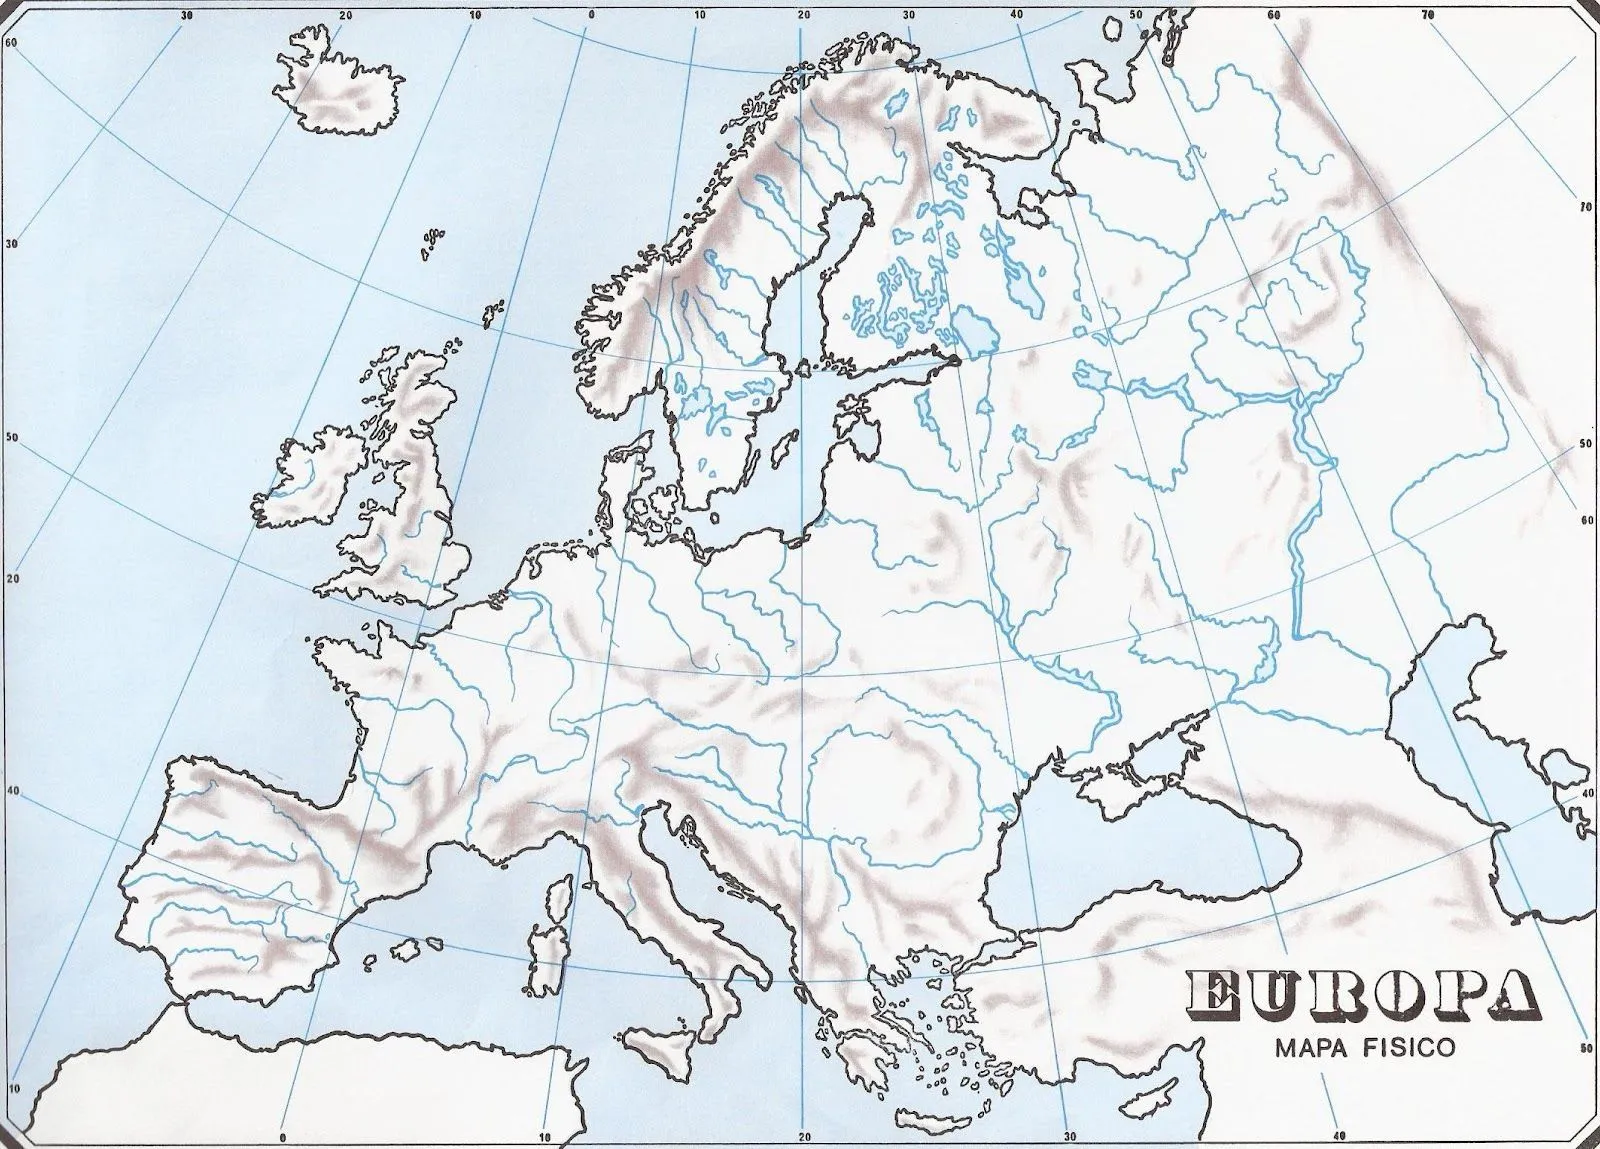 mapa mudo fisico europa imprimir - Buscar con Google | Ciencias ...